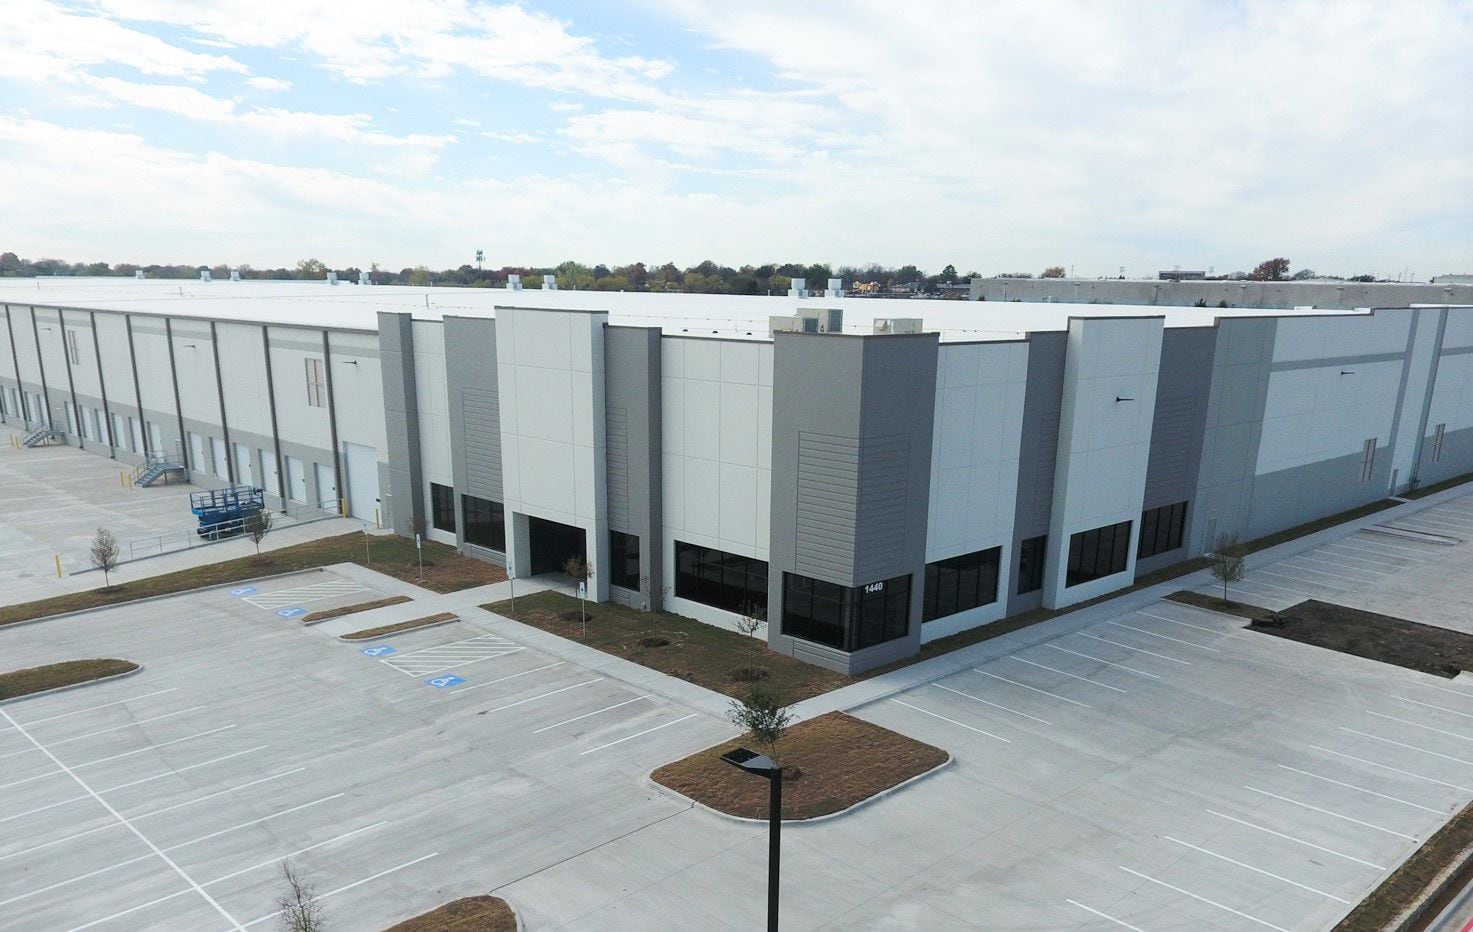 Dalfen Industrial also built the East Dallas Logistics Center building in Mesquite.